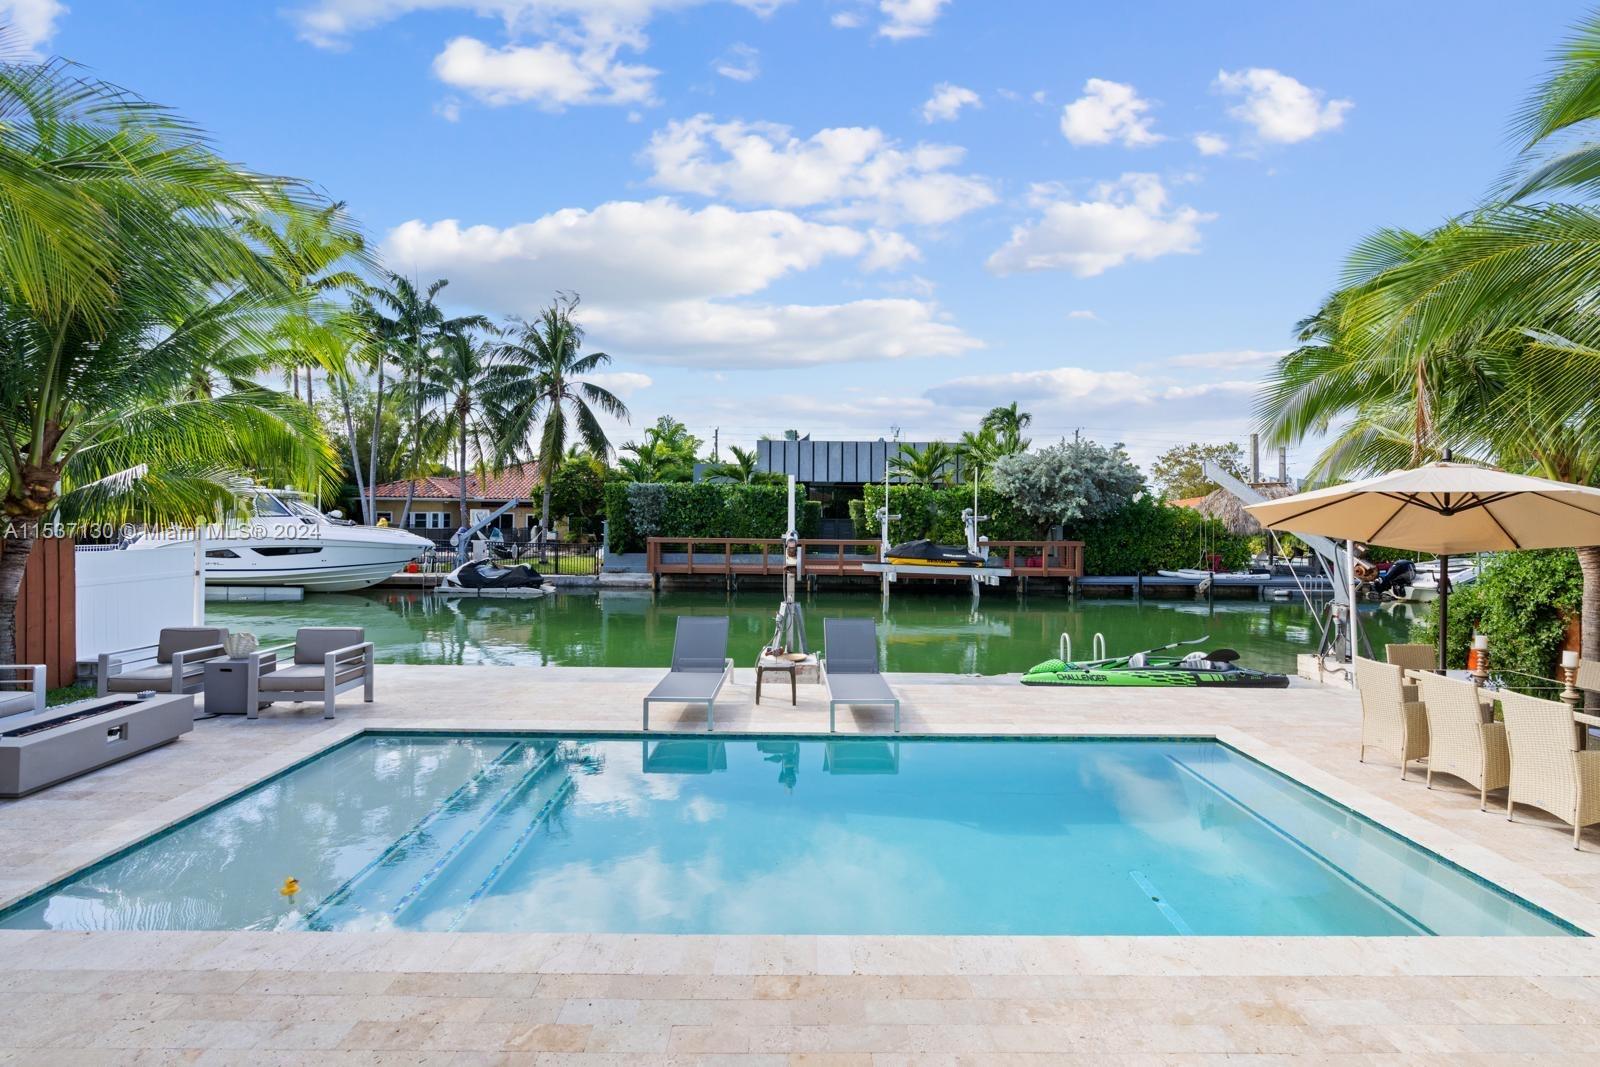 Rental Property at 7990 Hawthorne Ave, Miami Beach, Miami-Dade County, Florida - Bedrooms: 4 
Bathrooms: 3  - $12,900 MO.